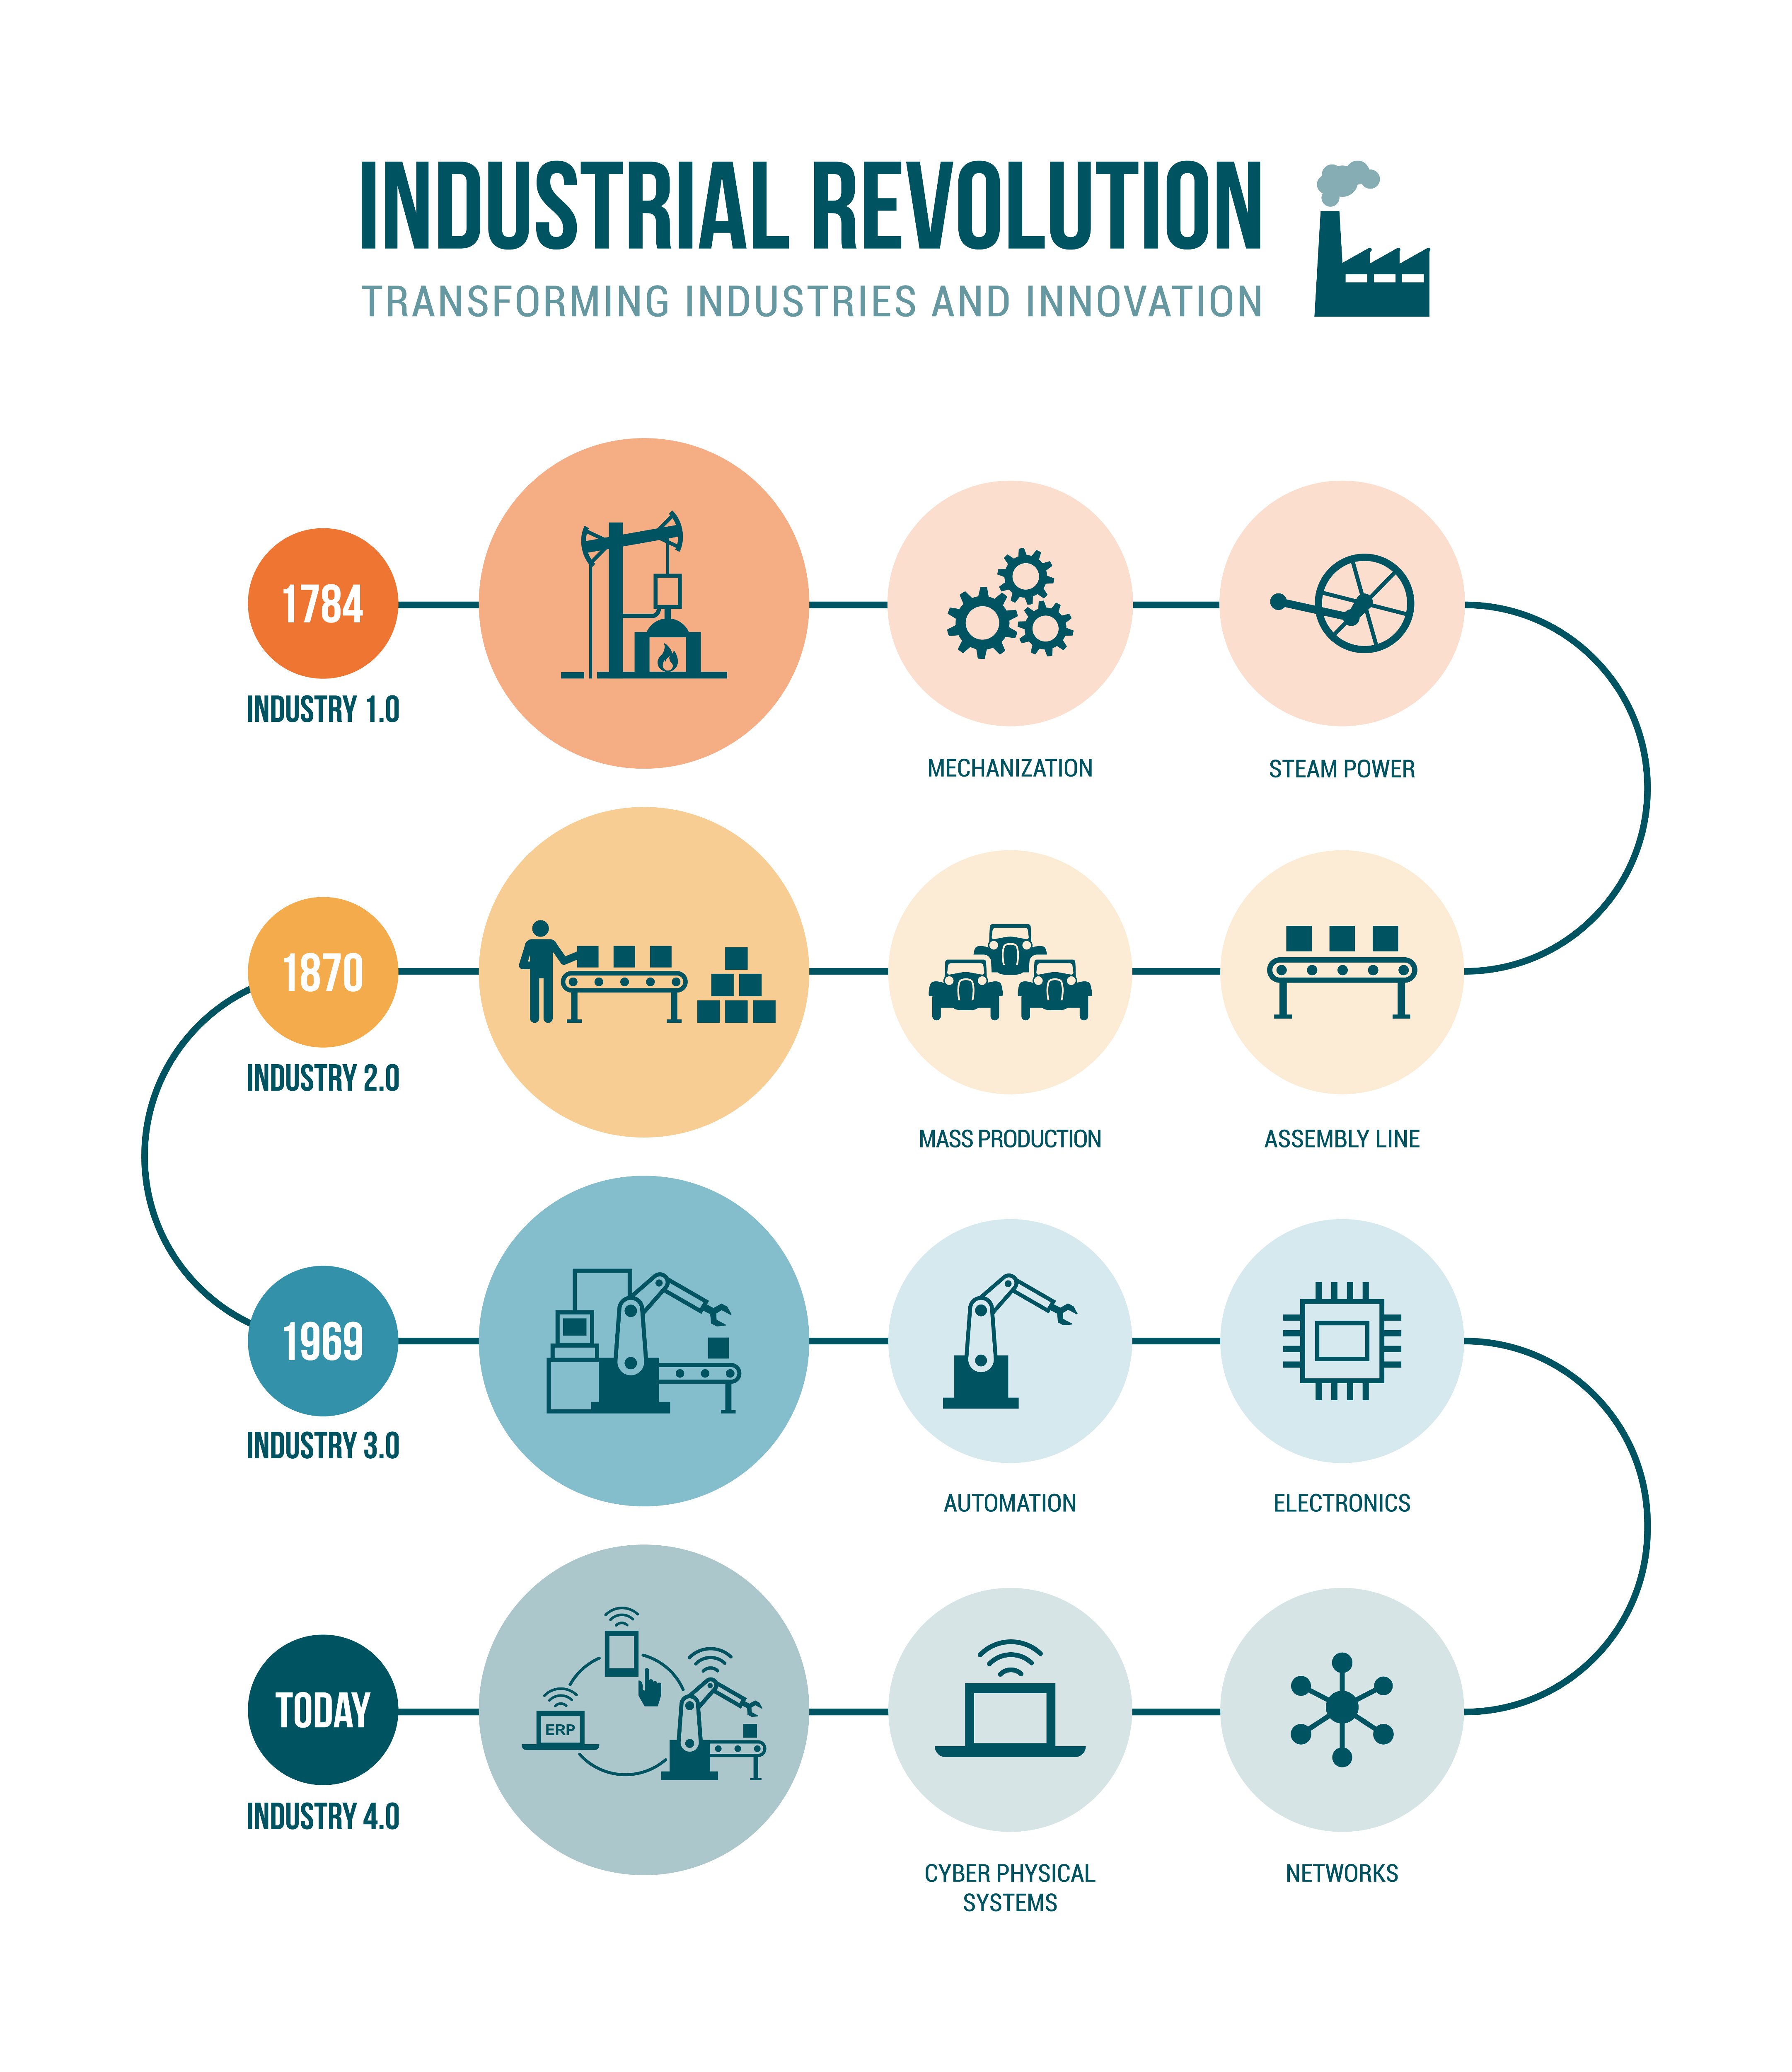 Fourth Industrial Revolution - Industry 4.0